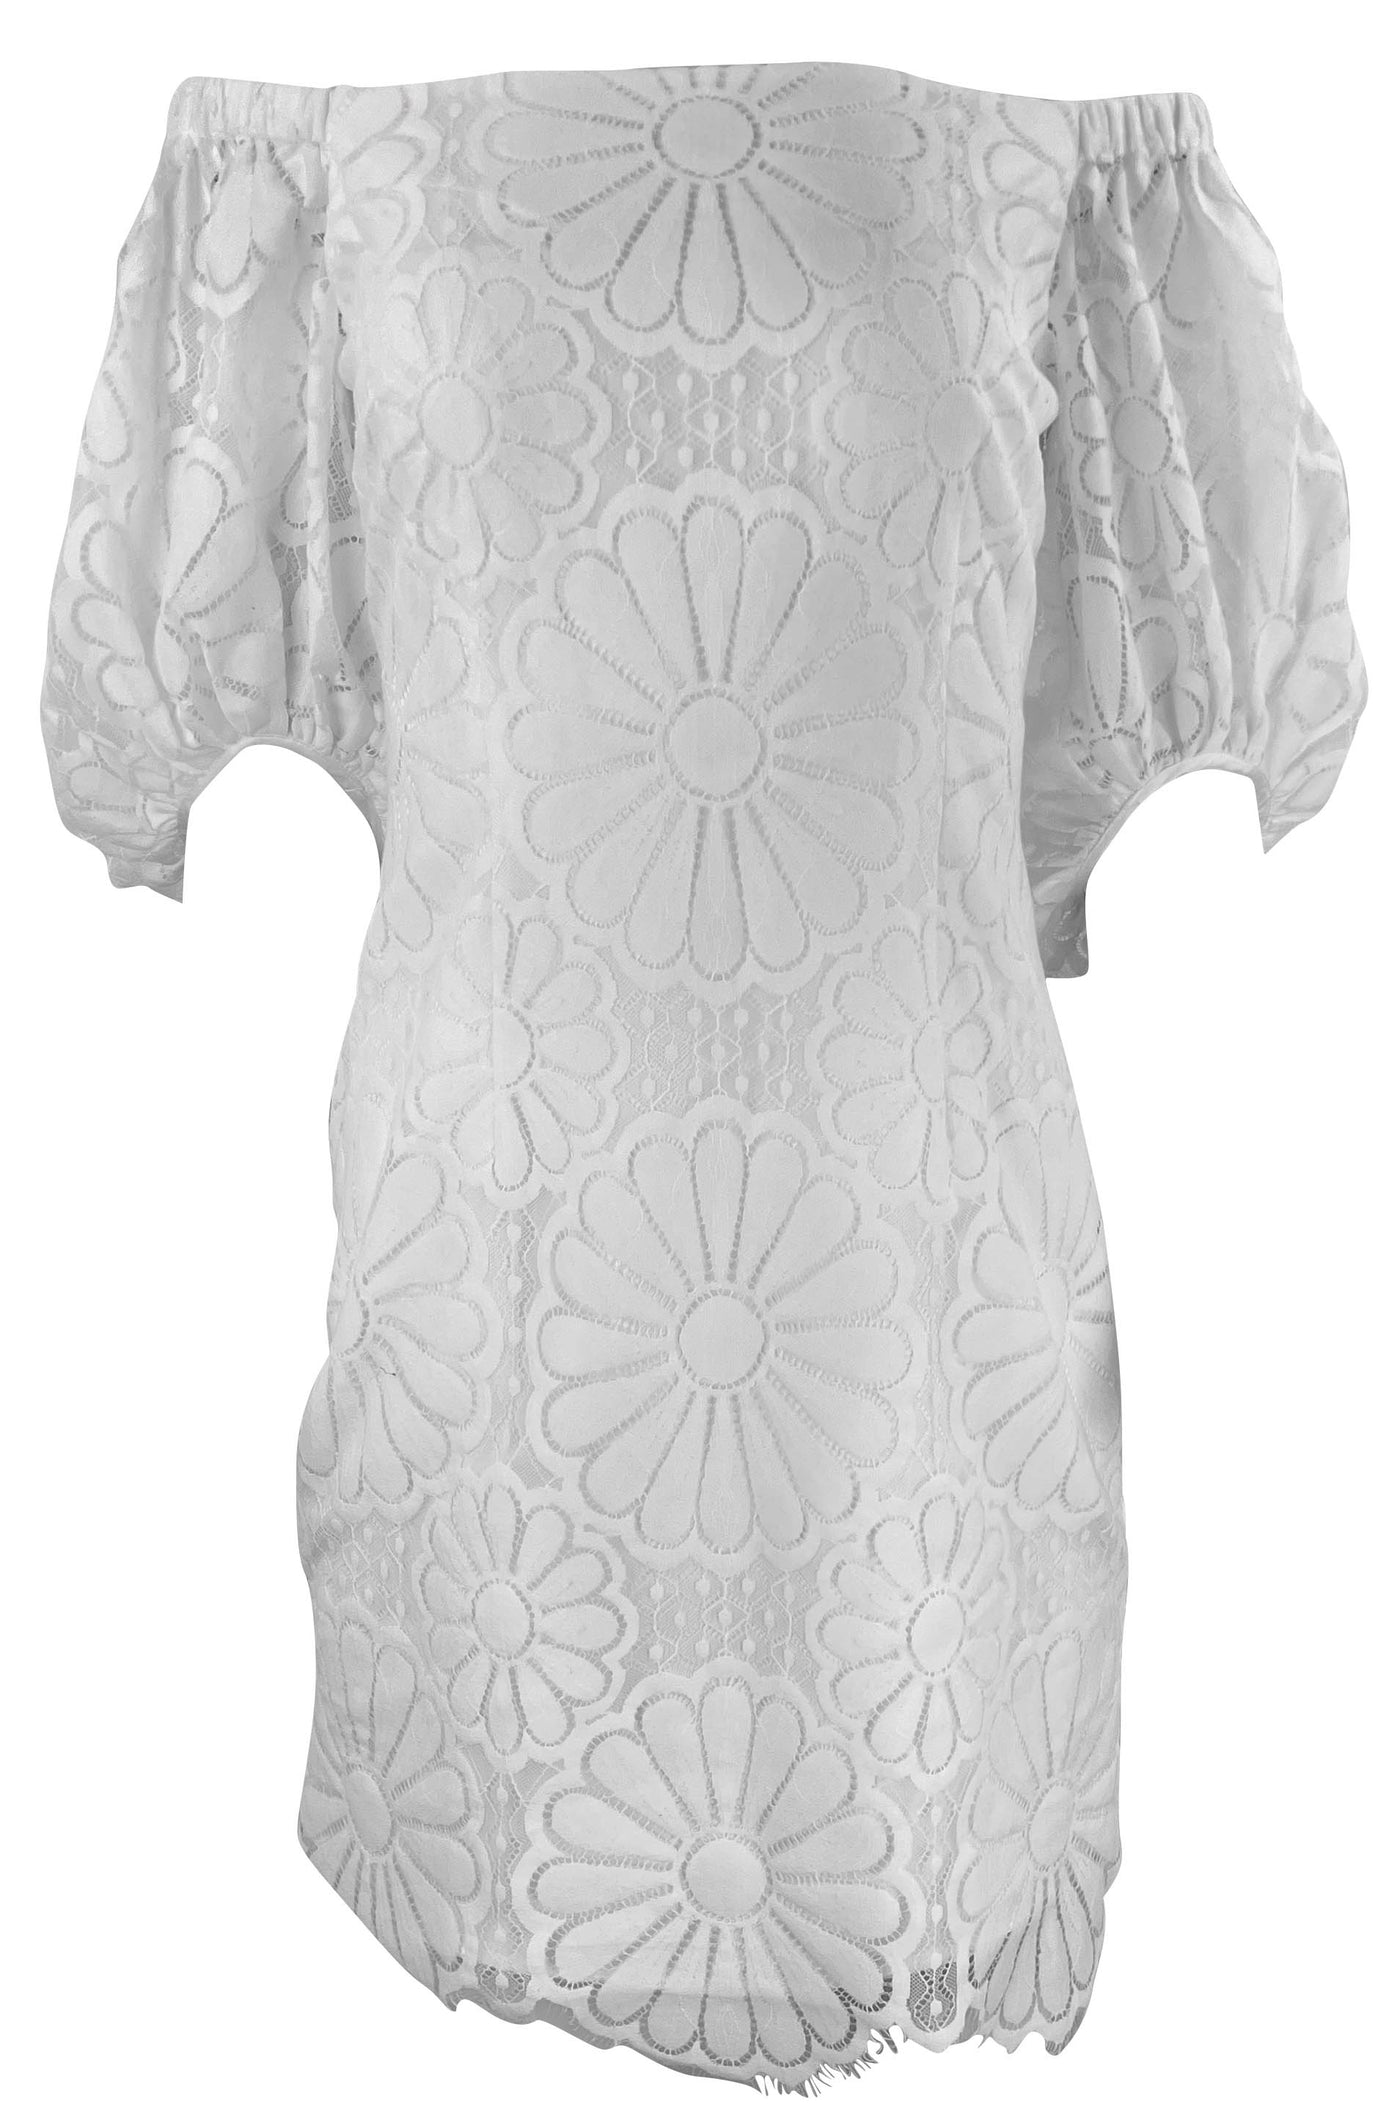 Trina Turk Sweet Dress in White - Discounts on Trina Turk at UAL